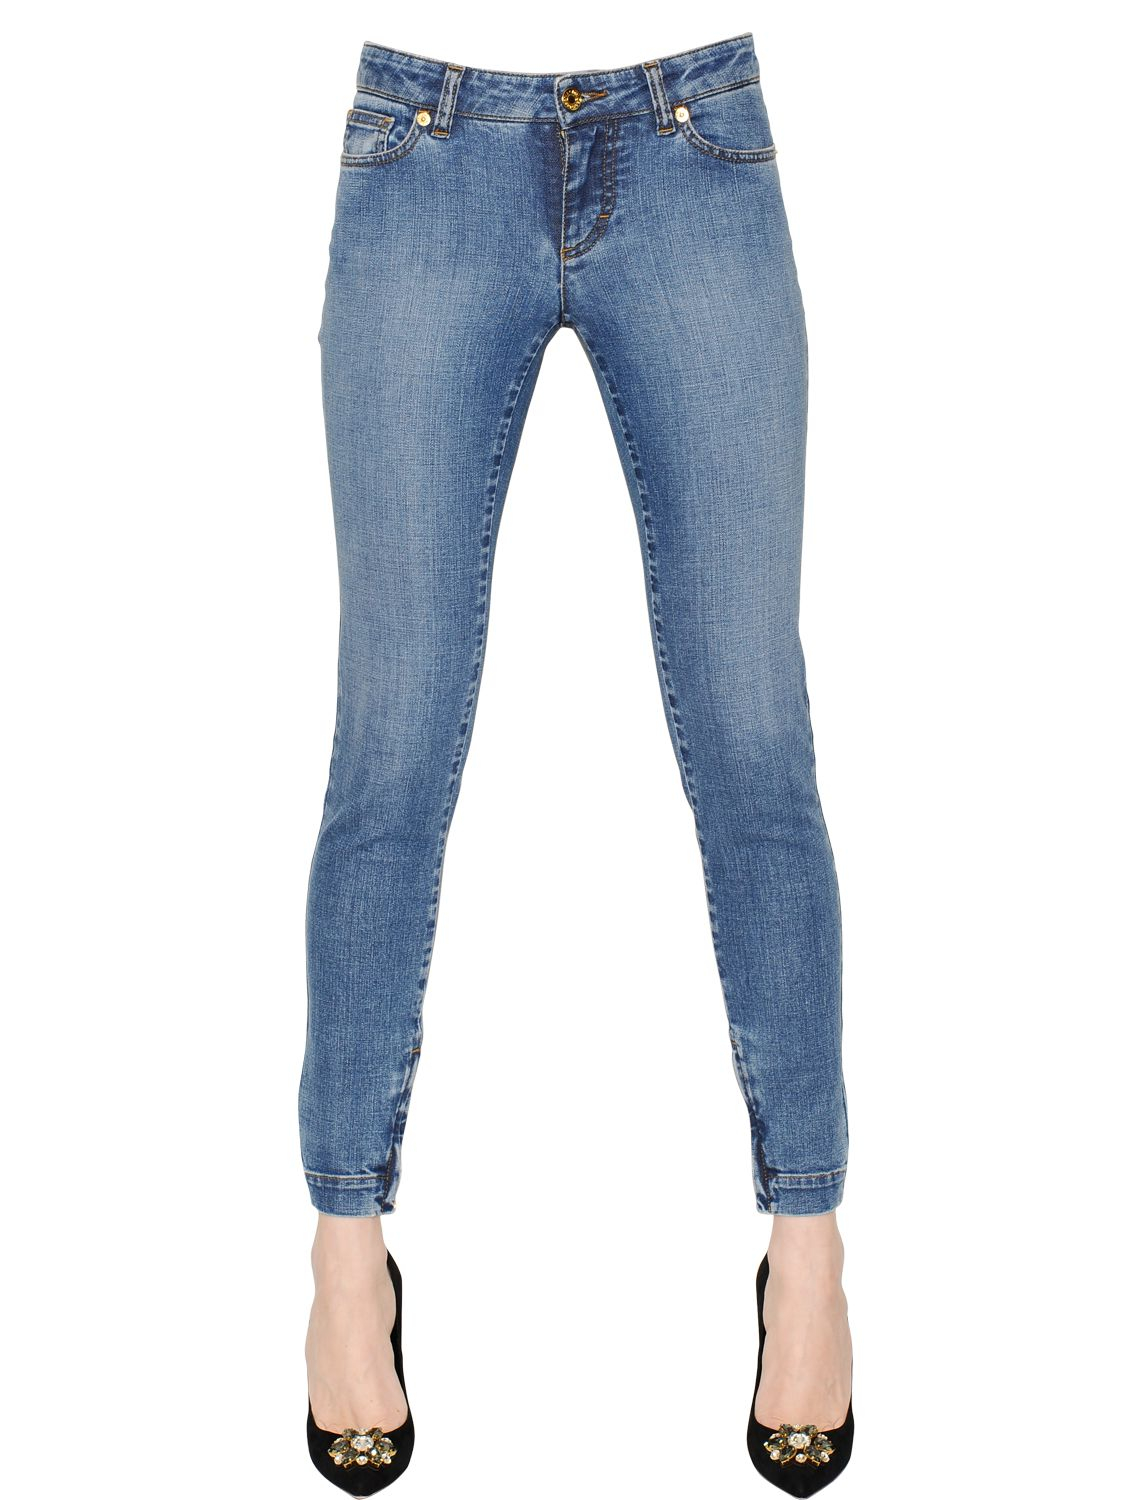 Lyst - Dolce & Gabbana Pretty Stretch Cotton Denim Jeans in Blue